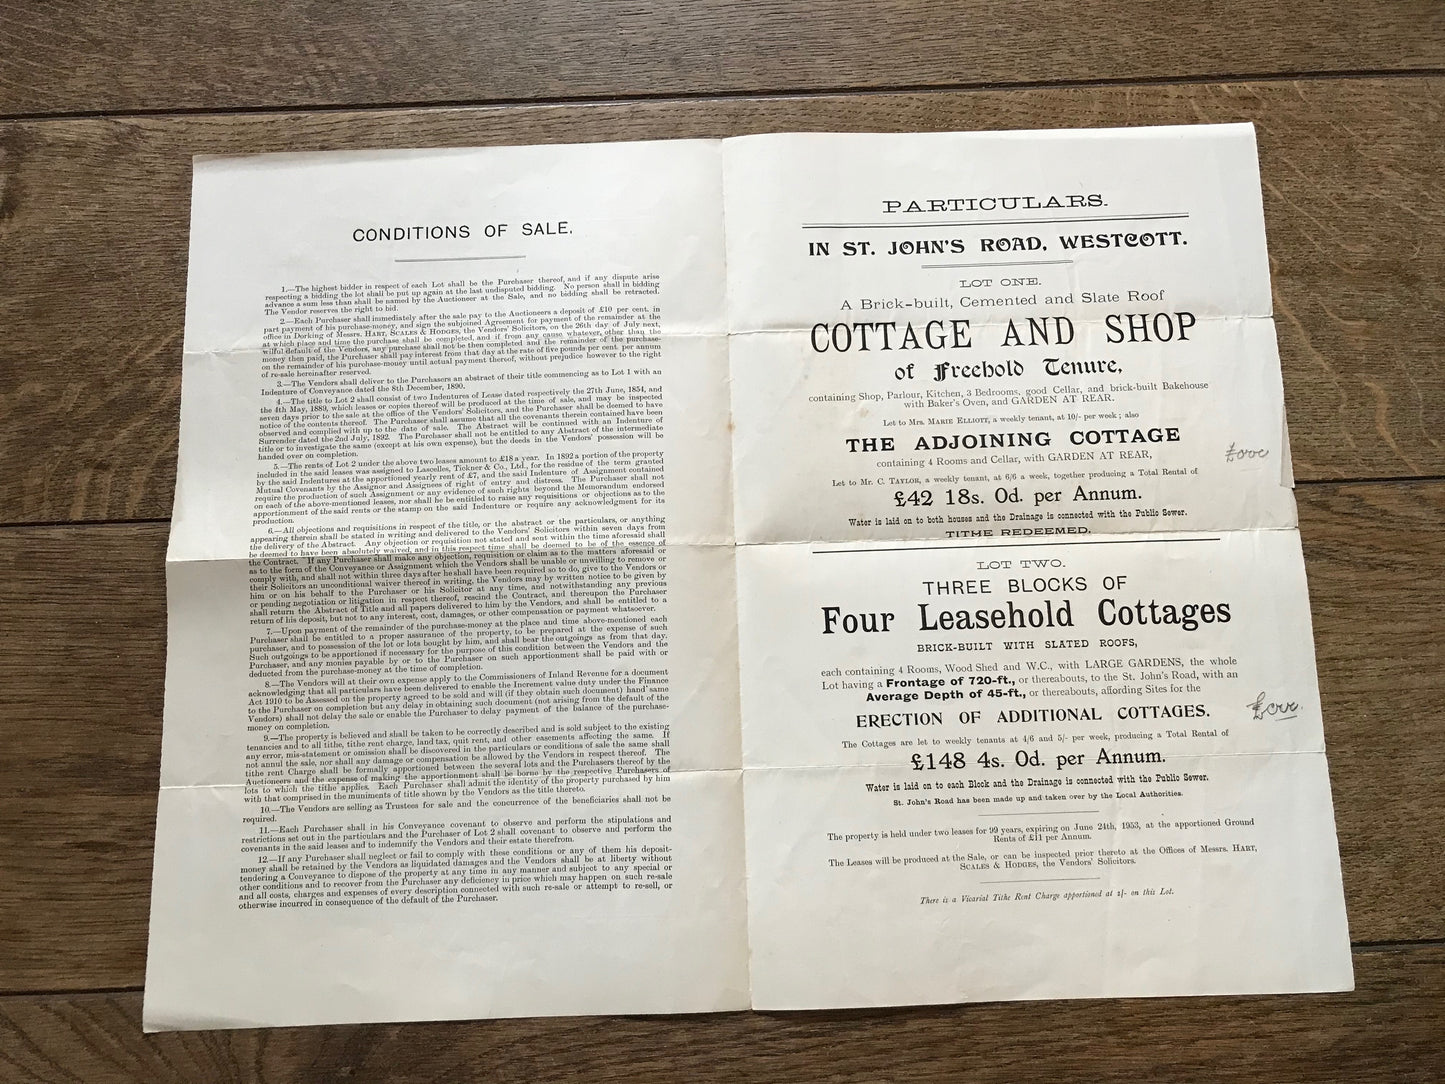 Shop & Cottage, St. John's Road, Westcott 1919 Sales Particulars